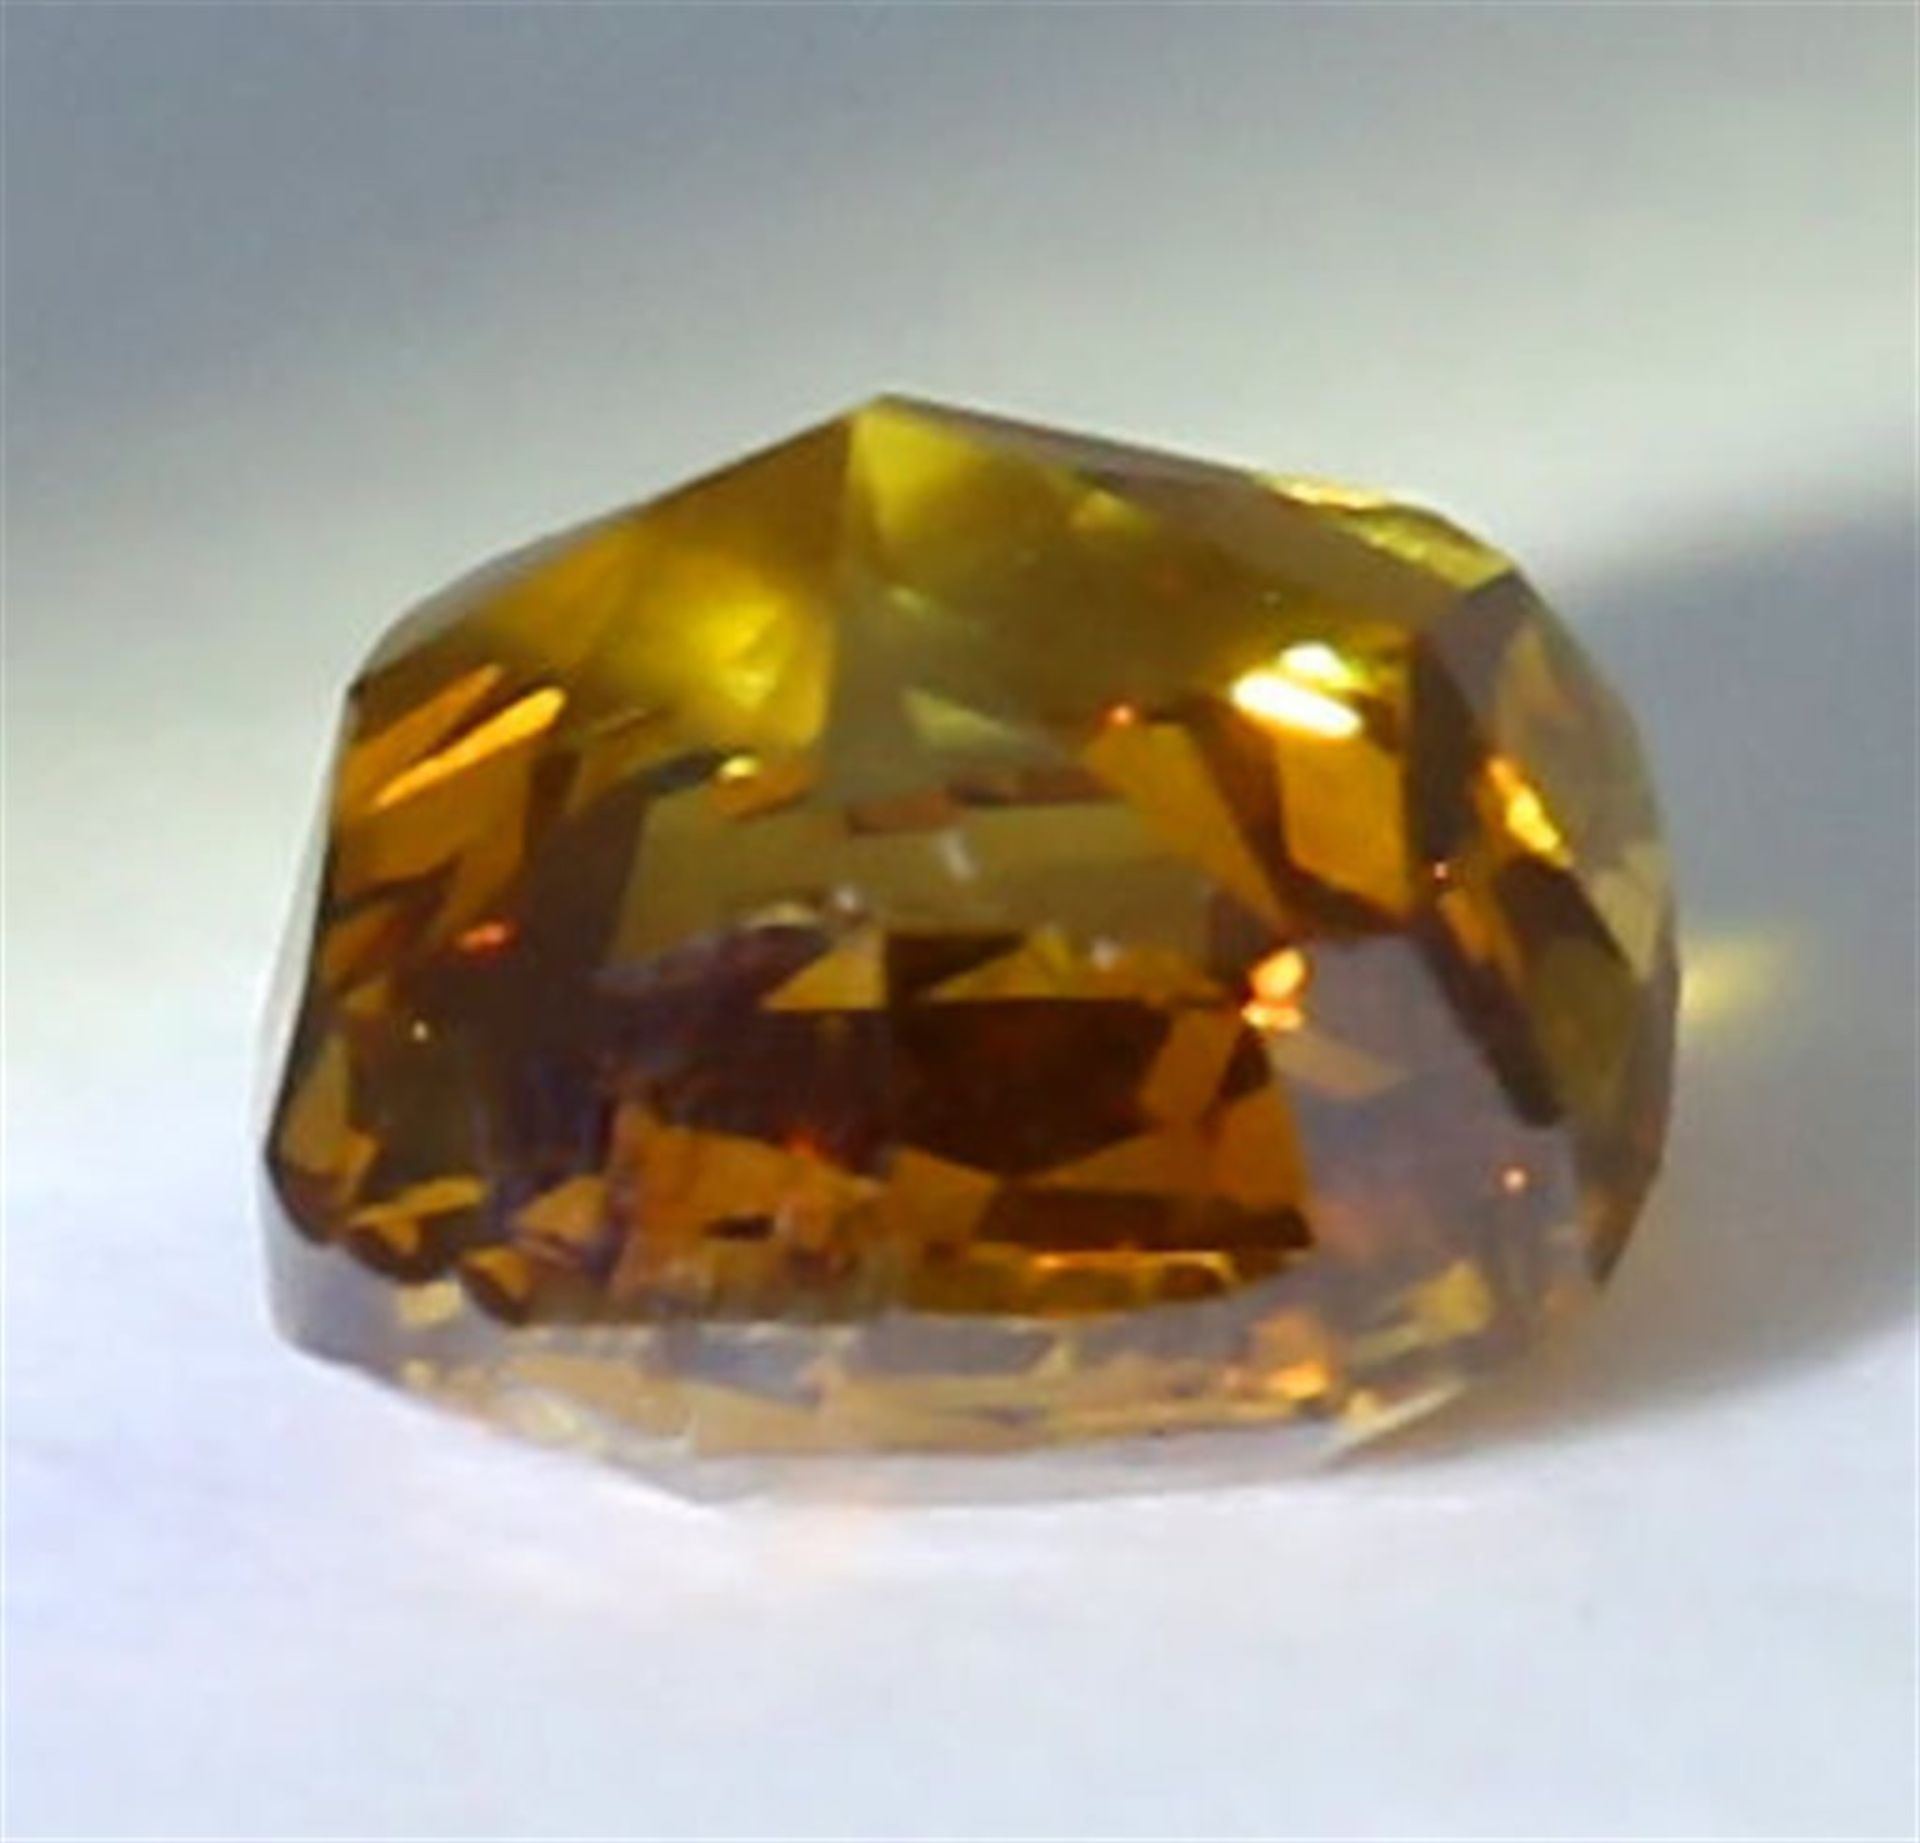 IGI Certified 0.66 ct. Diamond - Fancy Brownish Yellow - VS 2 UNTREATED - Image 6 of 6